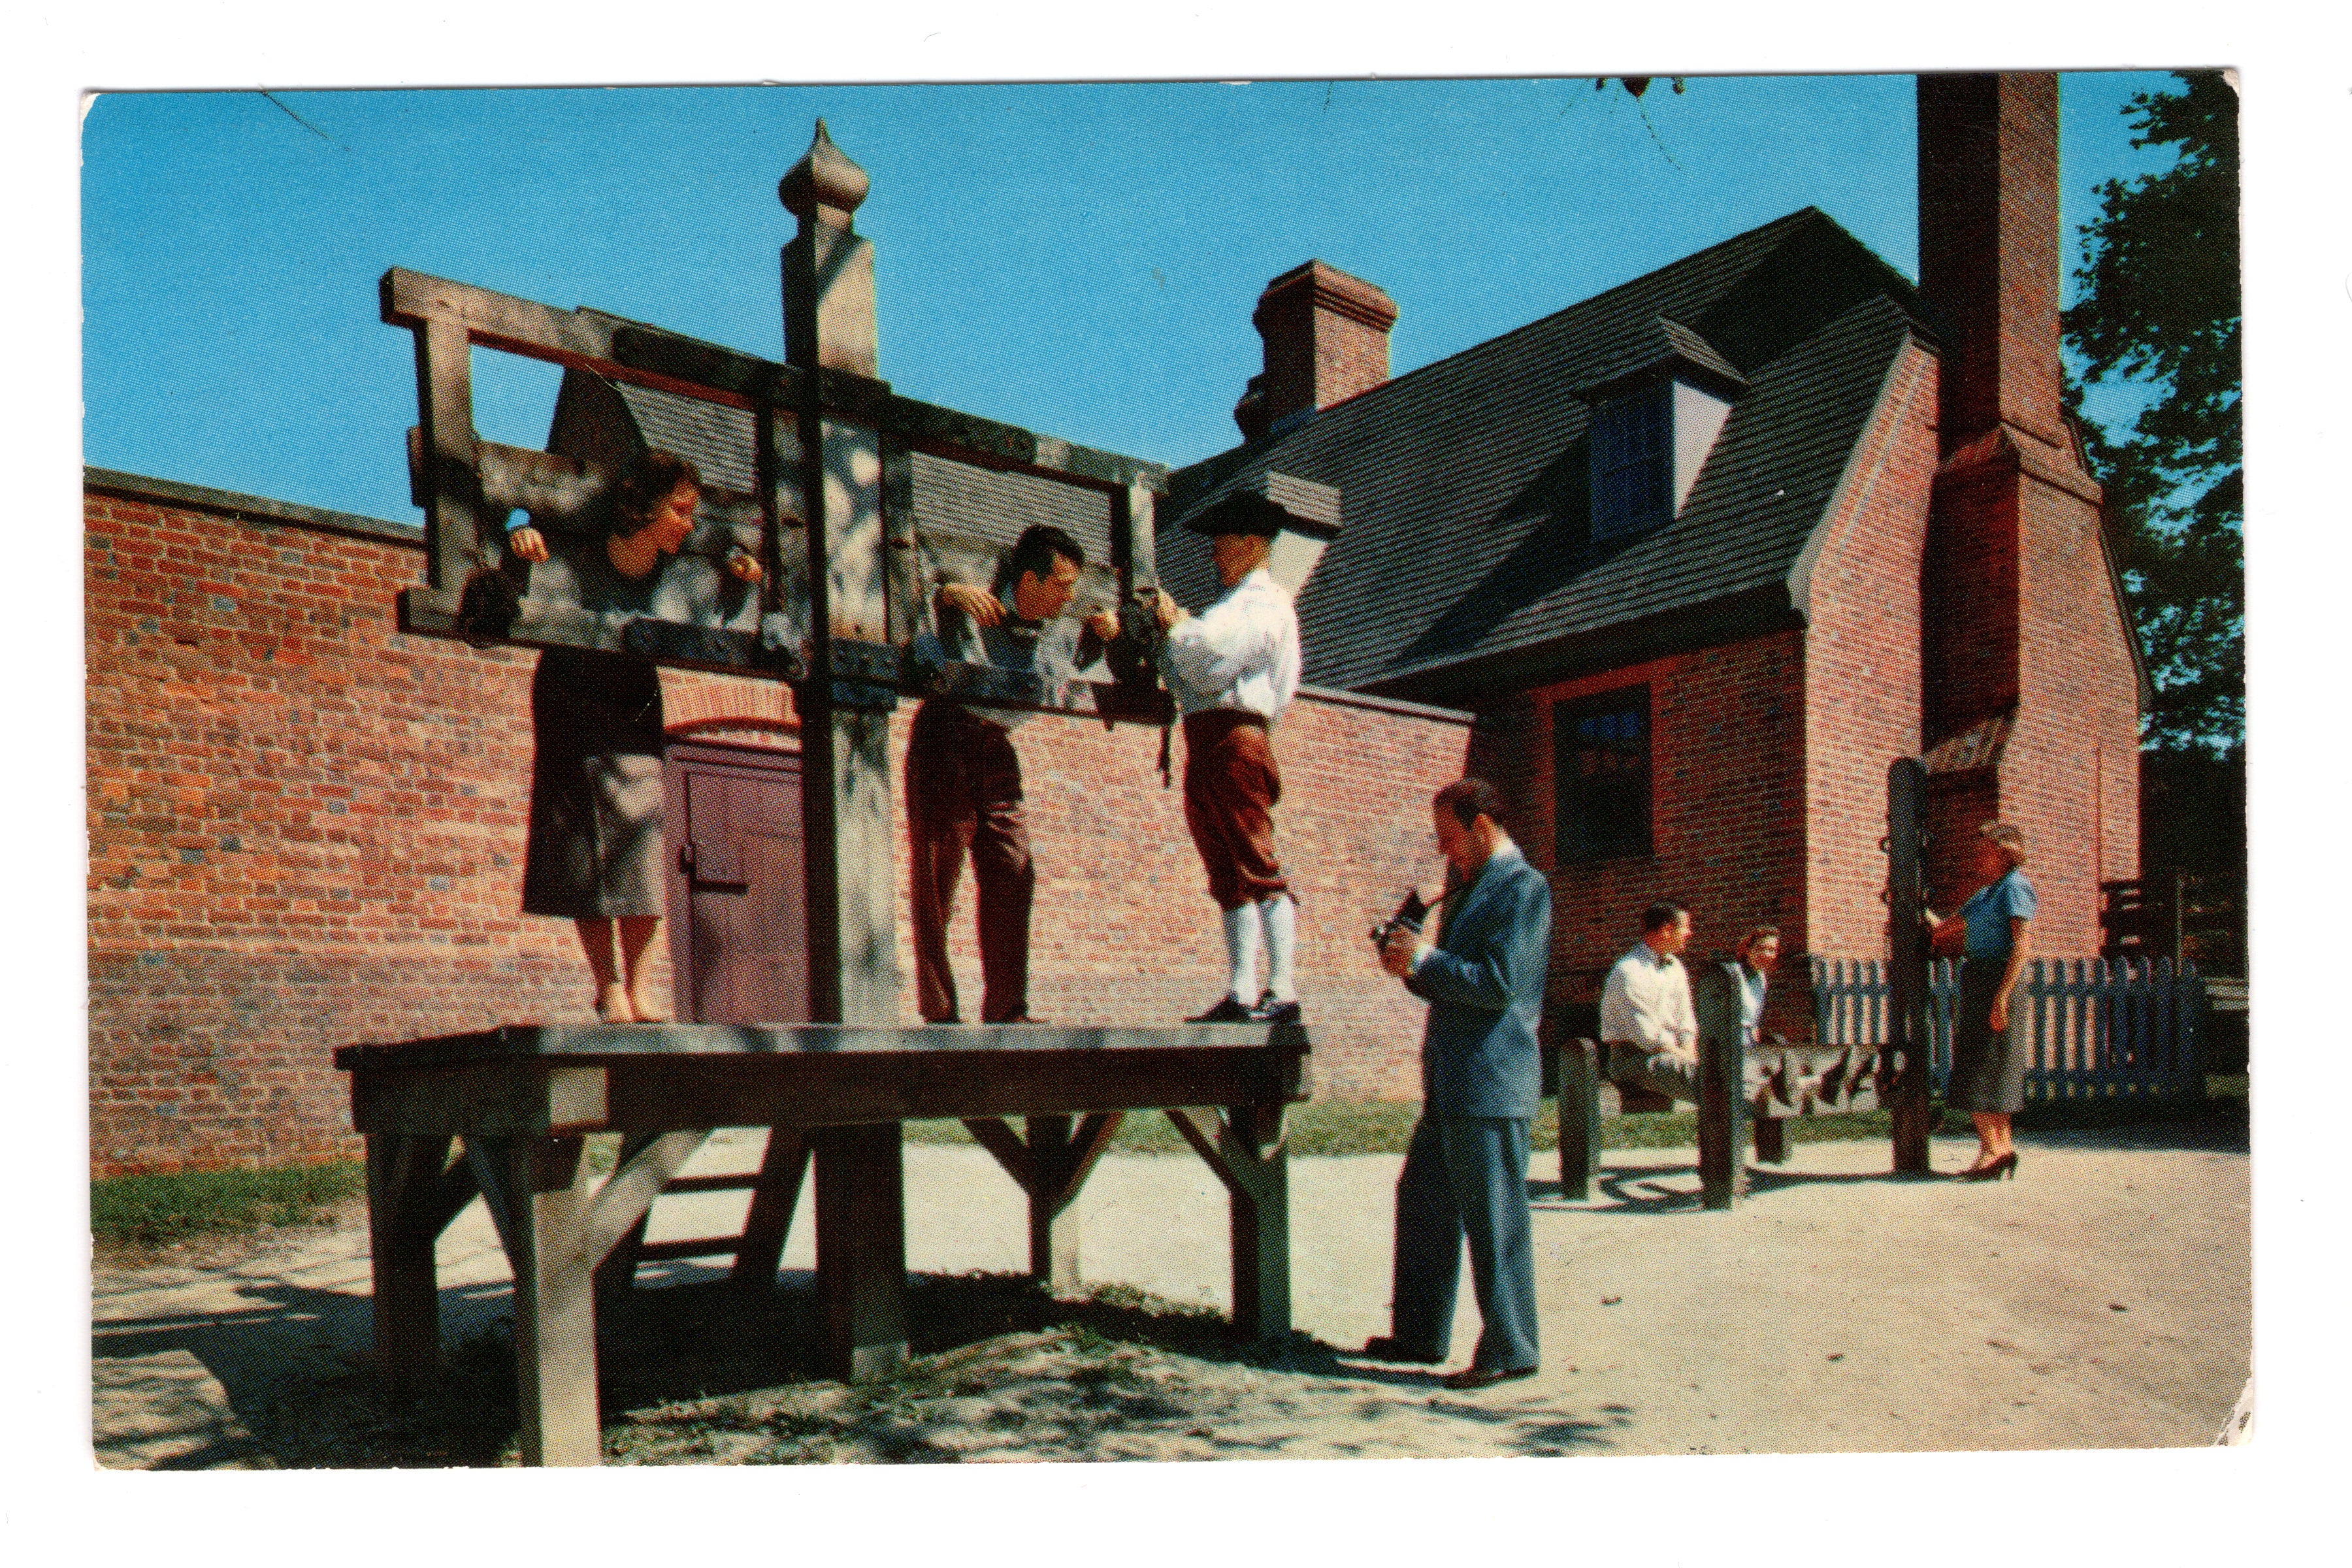 Public Gaol, Williamsburg, Virginia, Vintage Post Card.